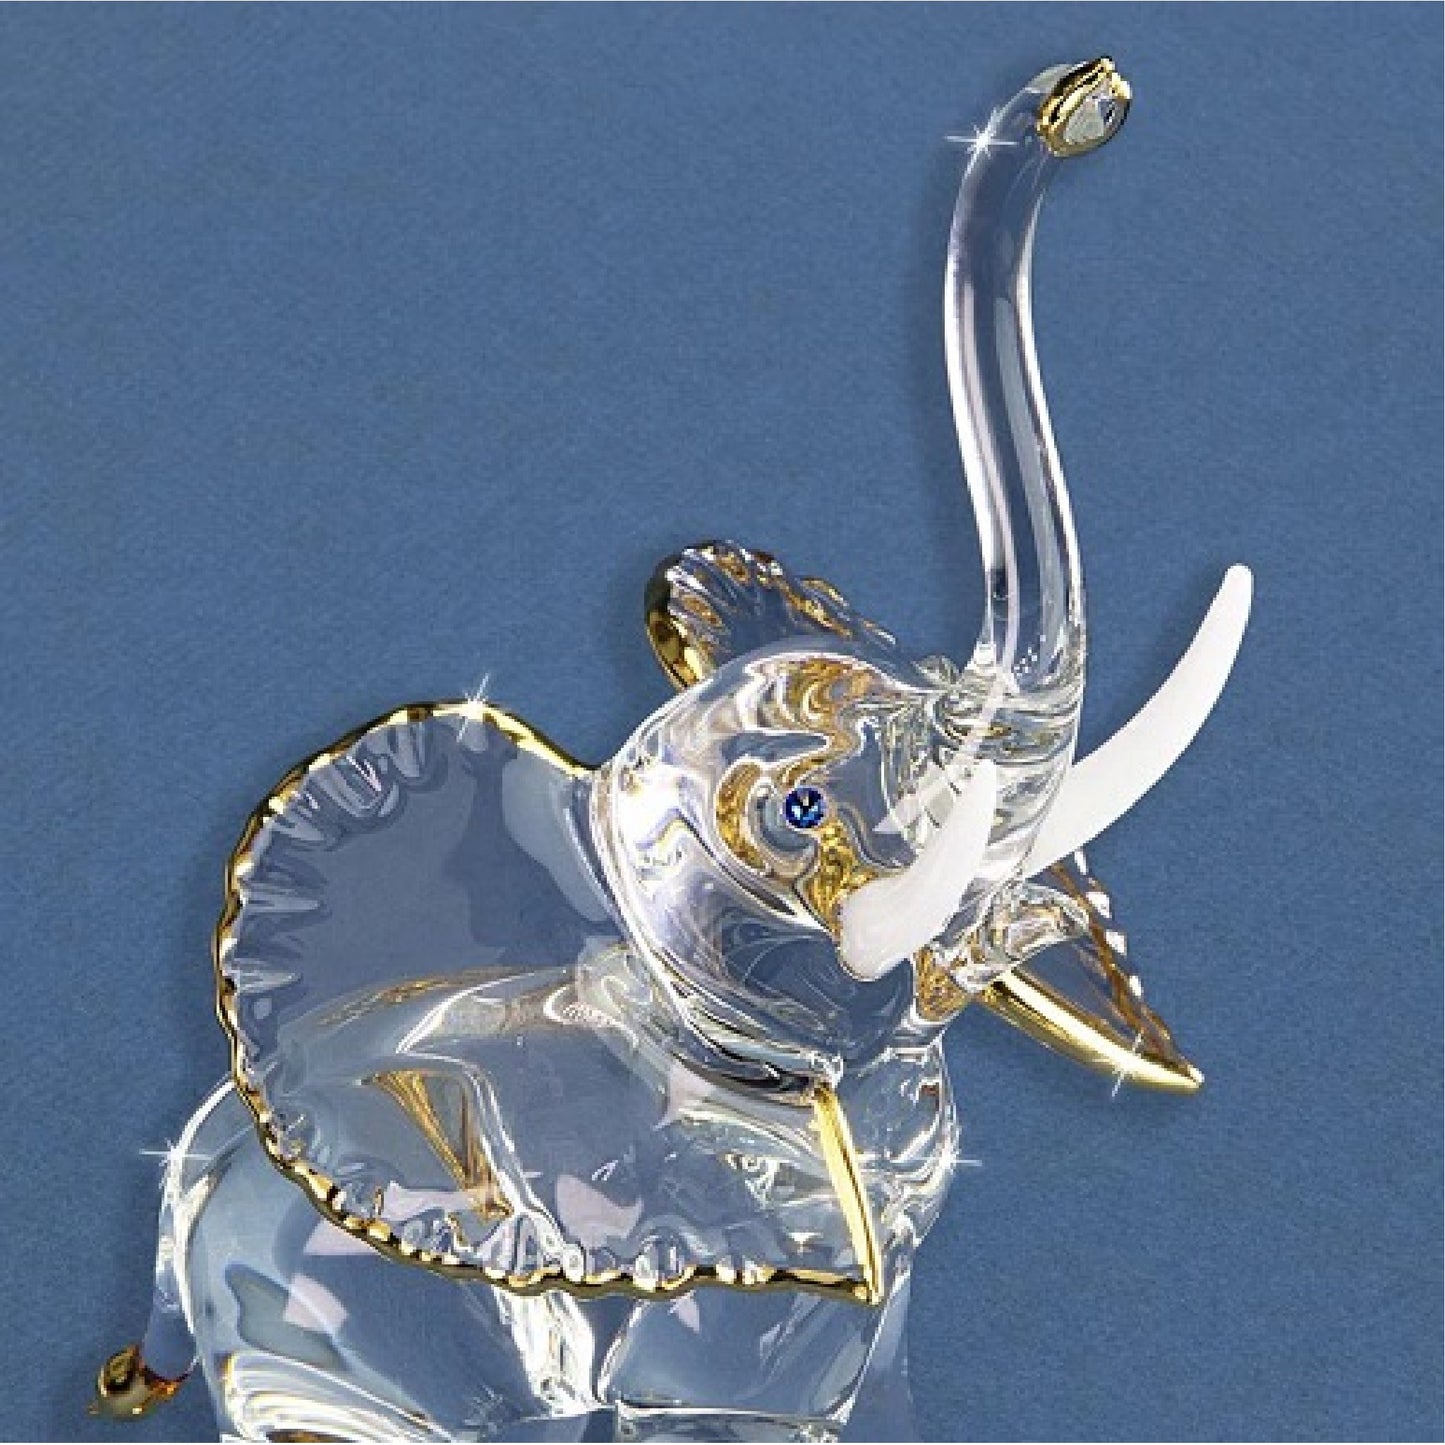 Glass Baron Elephant Tusk Up Figure